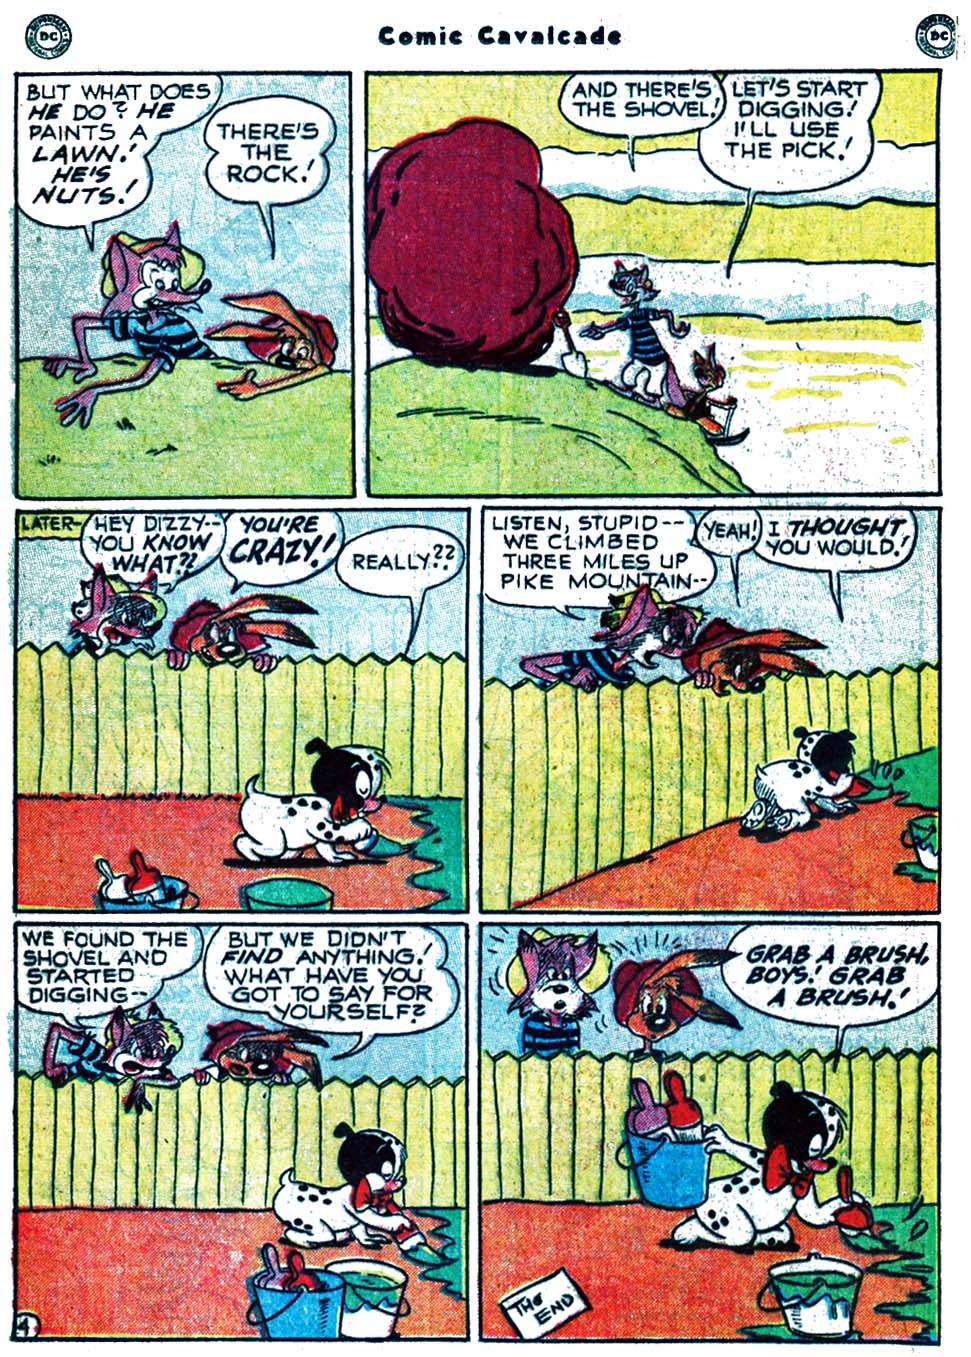 Comic Cavalcade issue 42 - Page 28